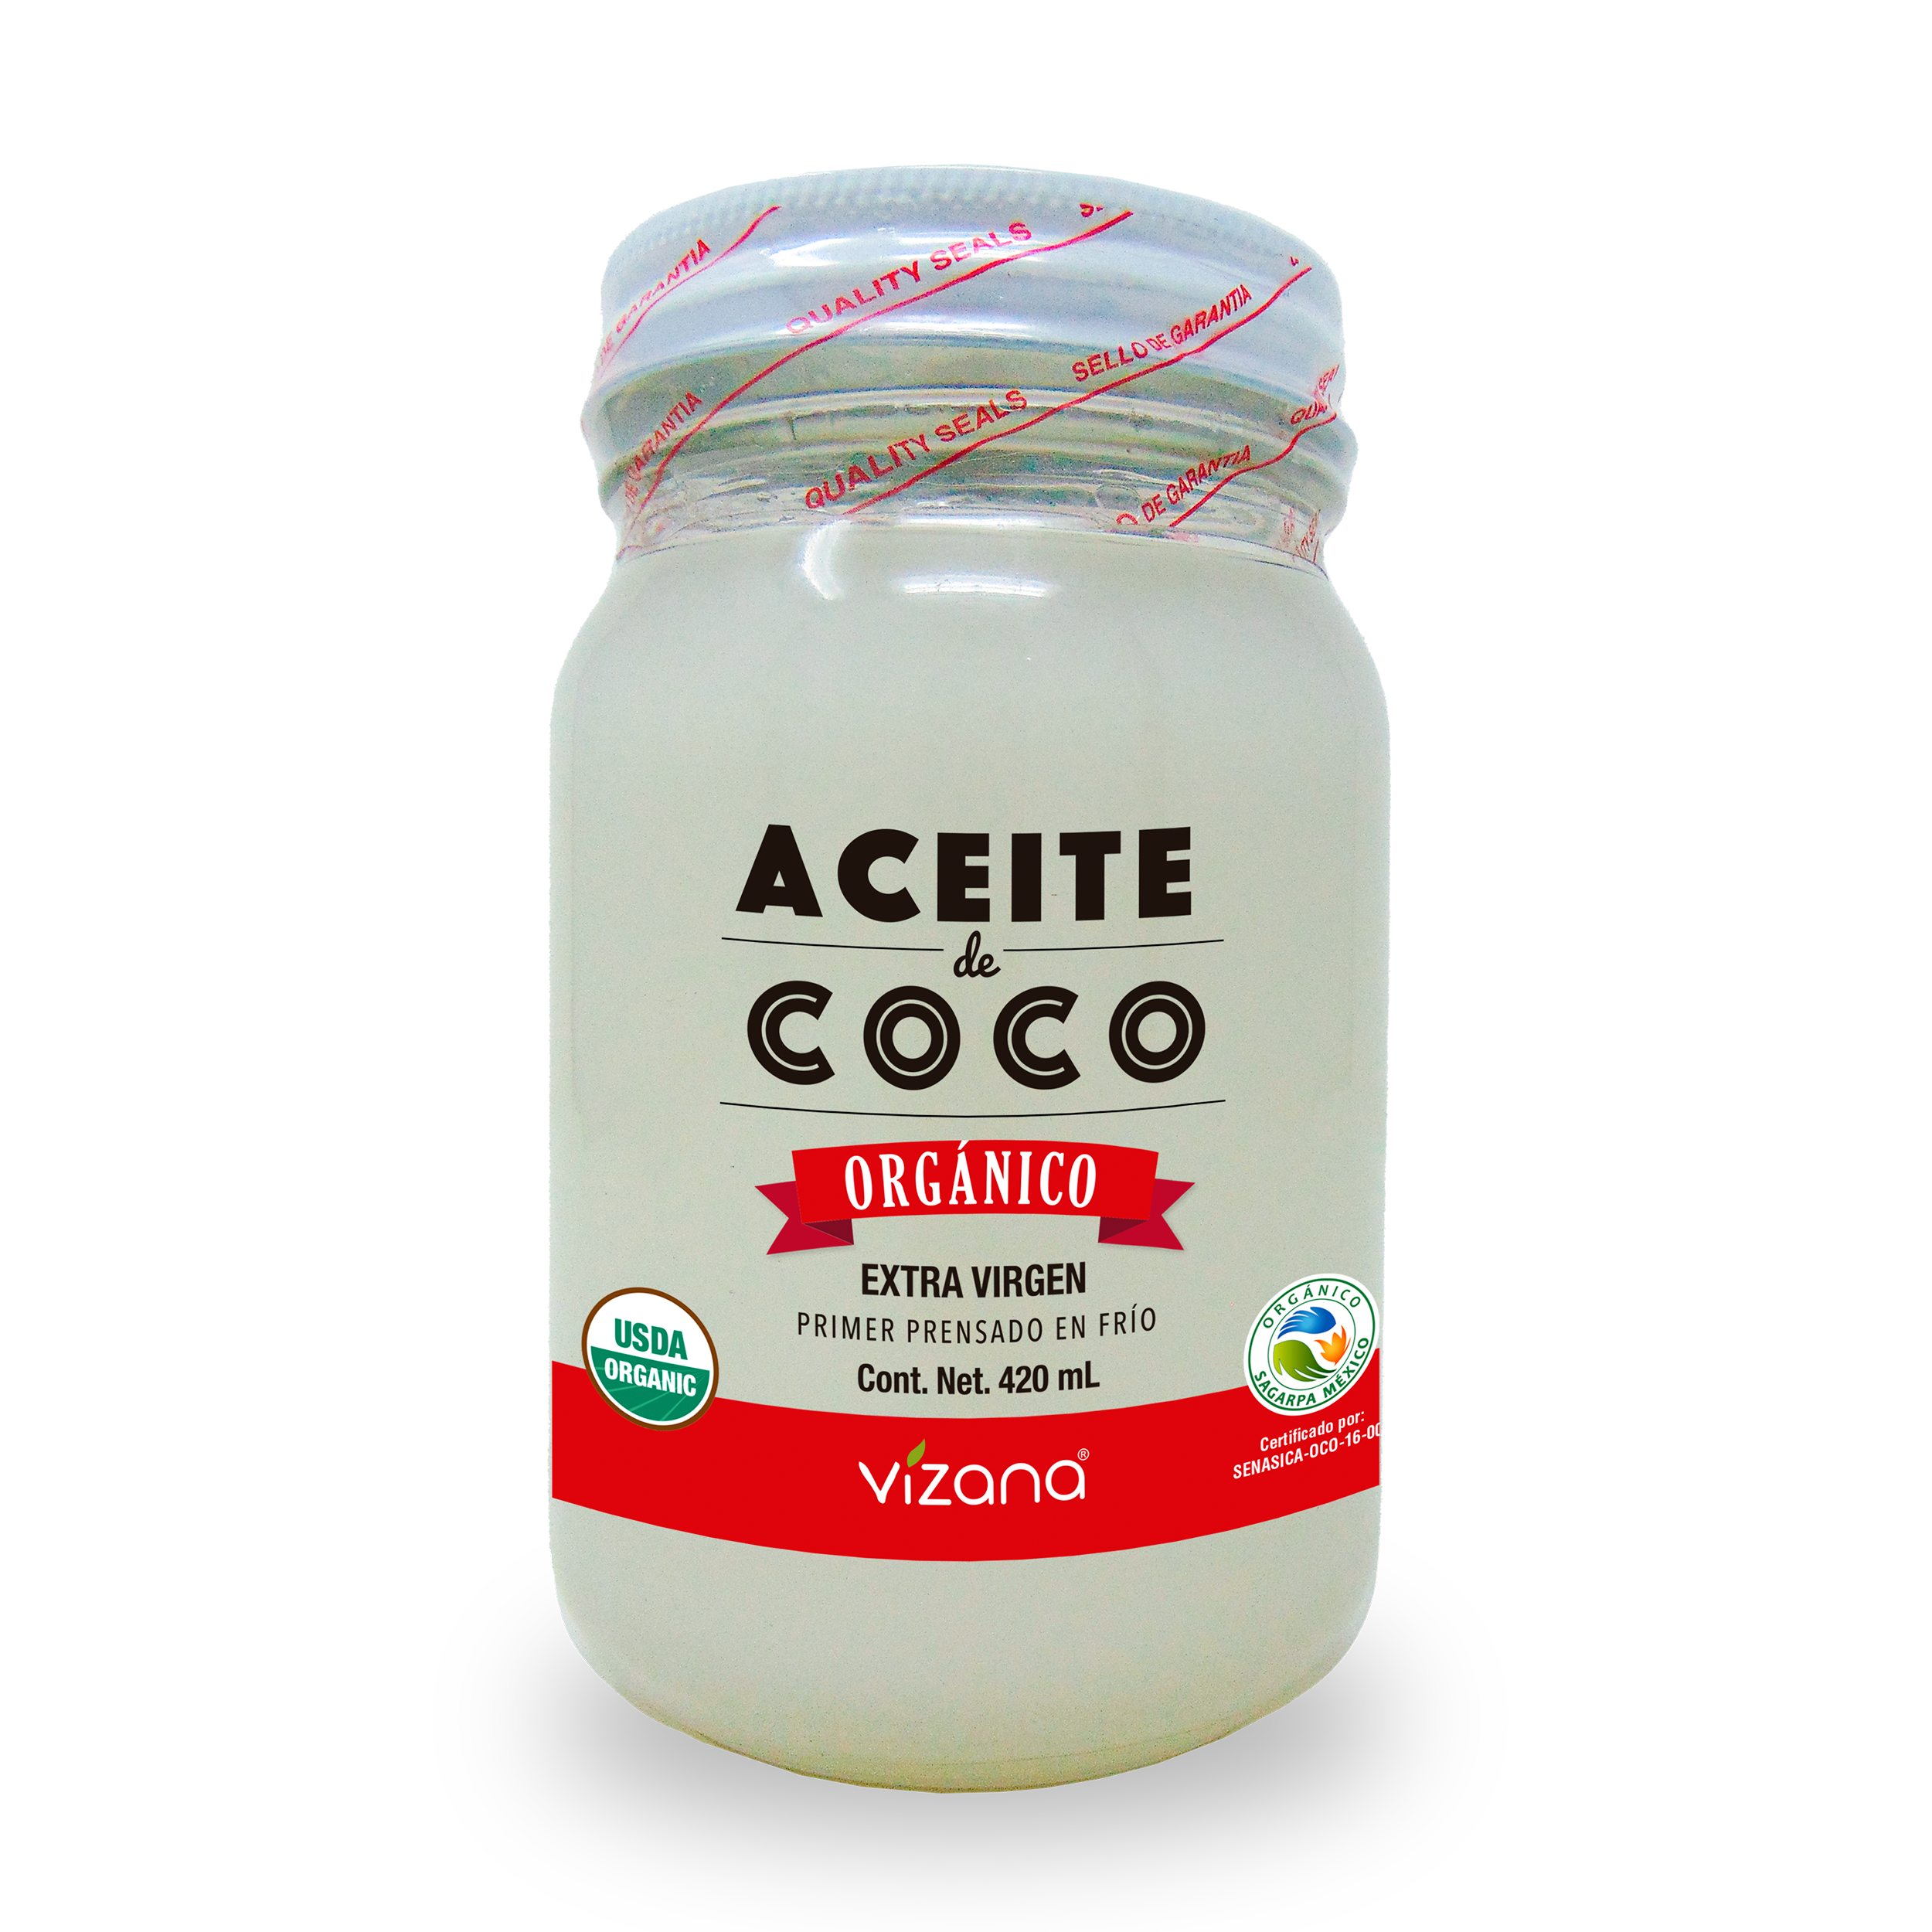 Aceite de Coco organico – Vizana